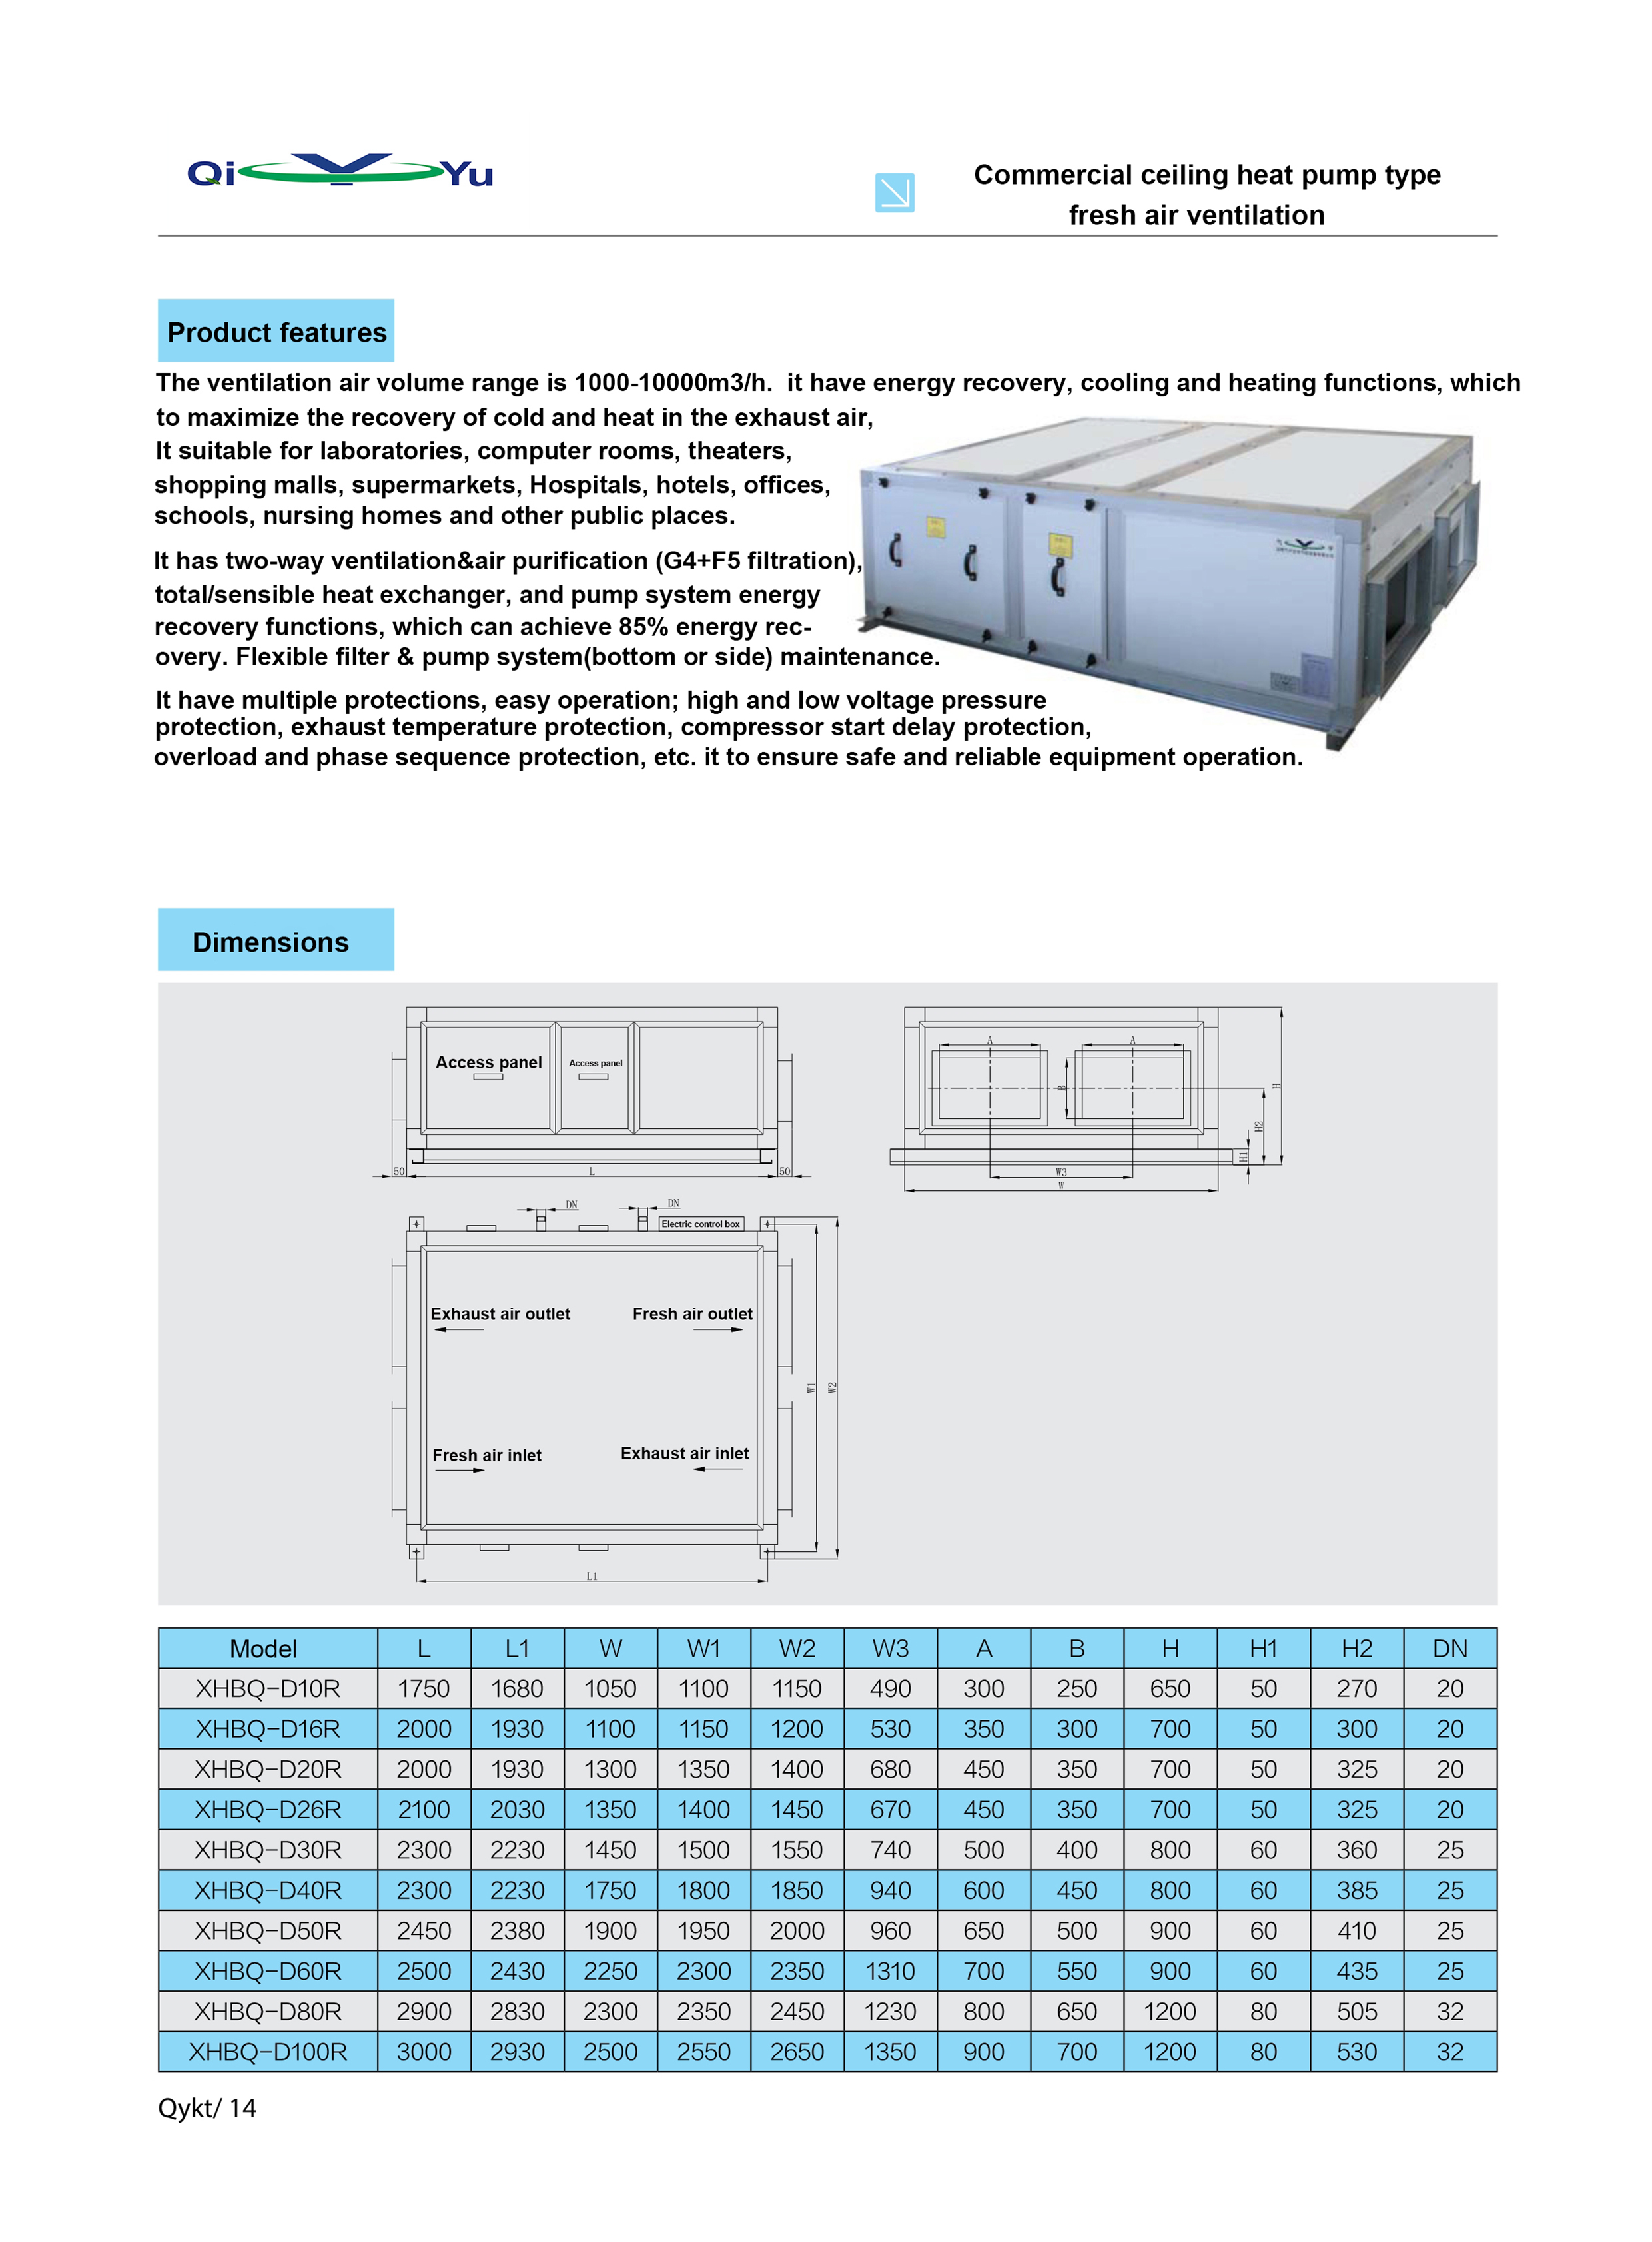 Commercial ceiling heat pump type fresh air centilation(图1)